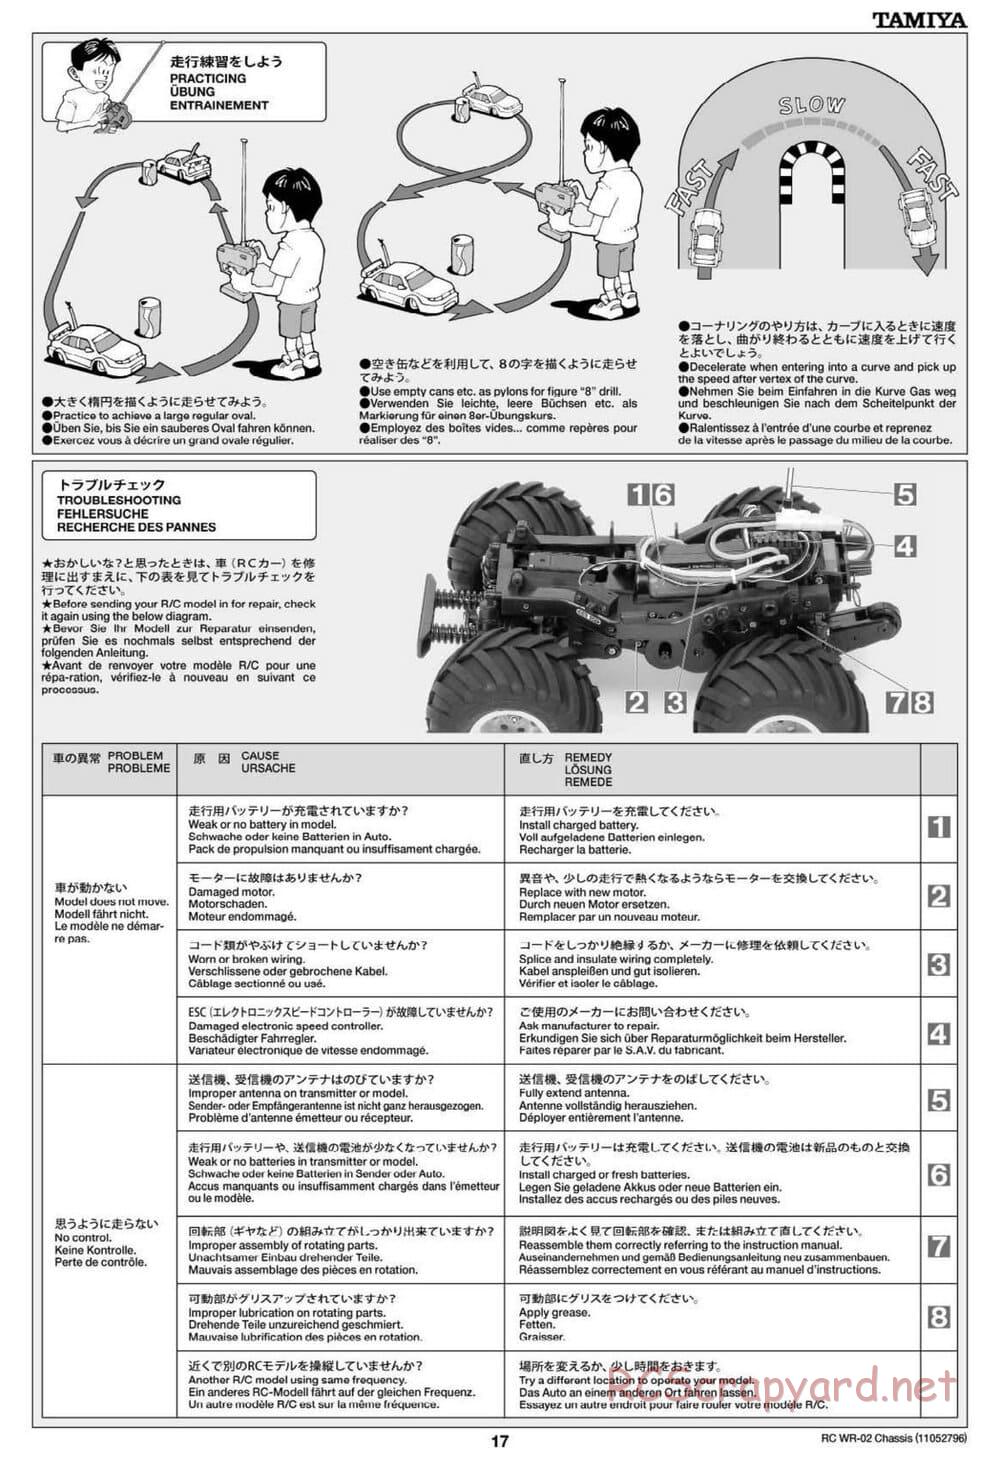 Tamiya - WR-02 Chassis - Manual - Page 17